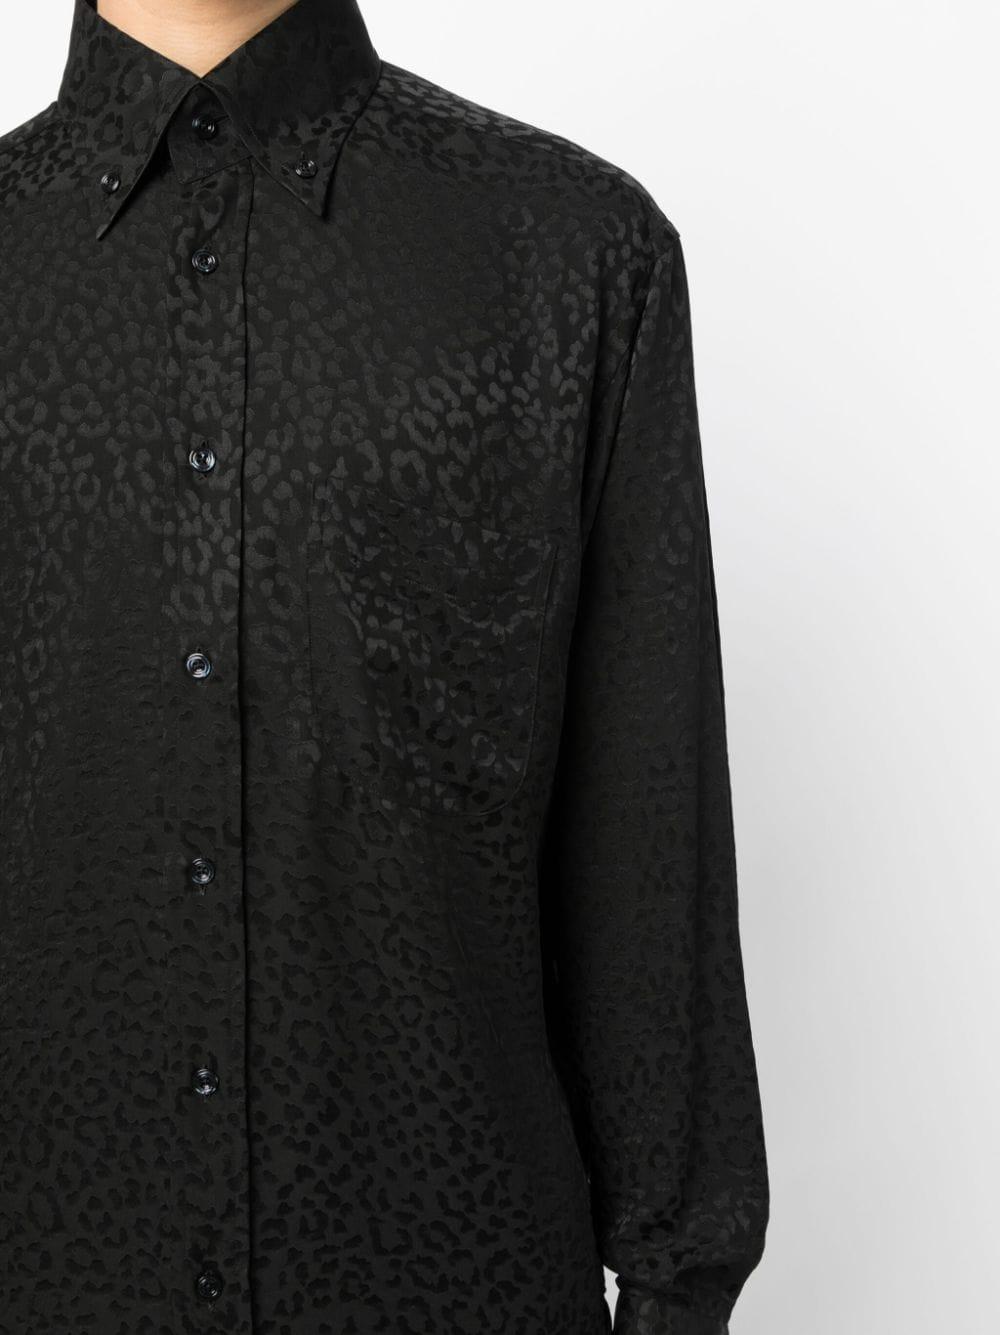 Tom Ford Leopard-jacquard Silk Shirt in Black for Men